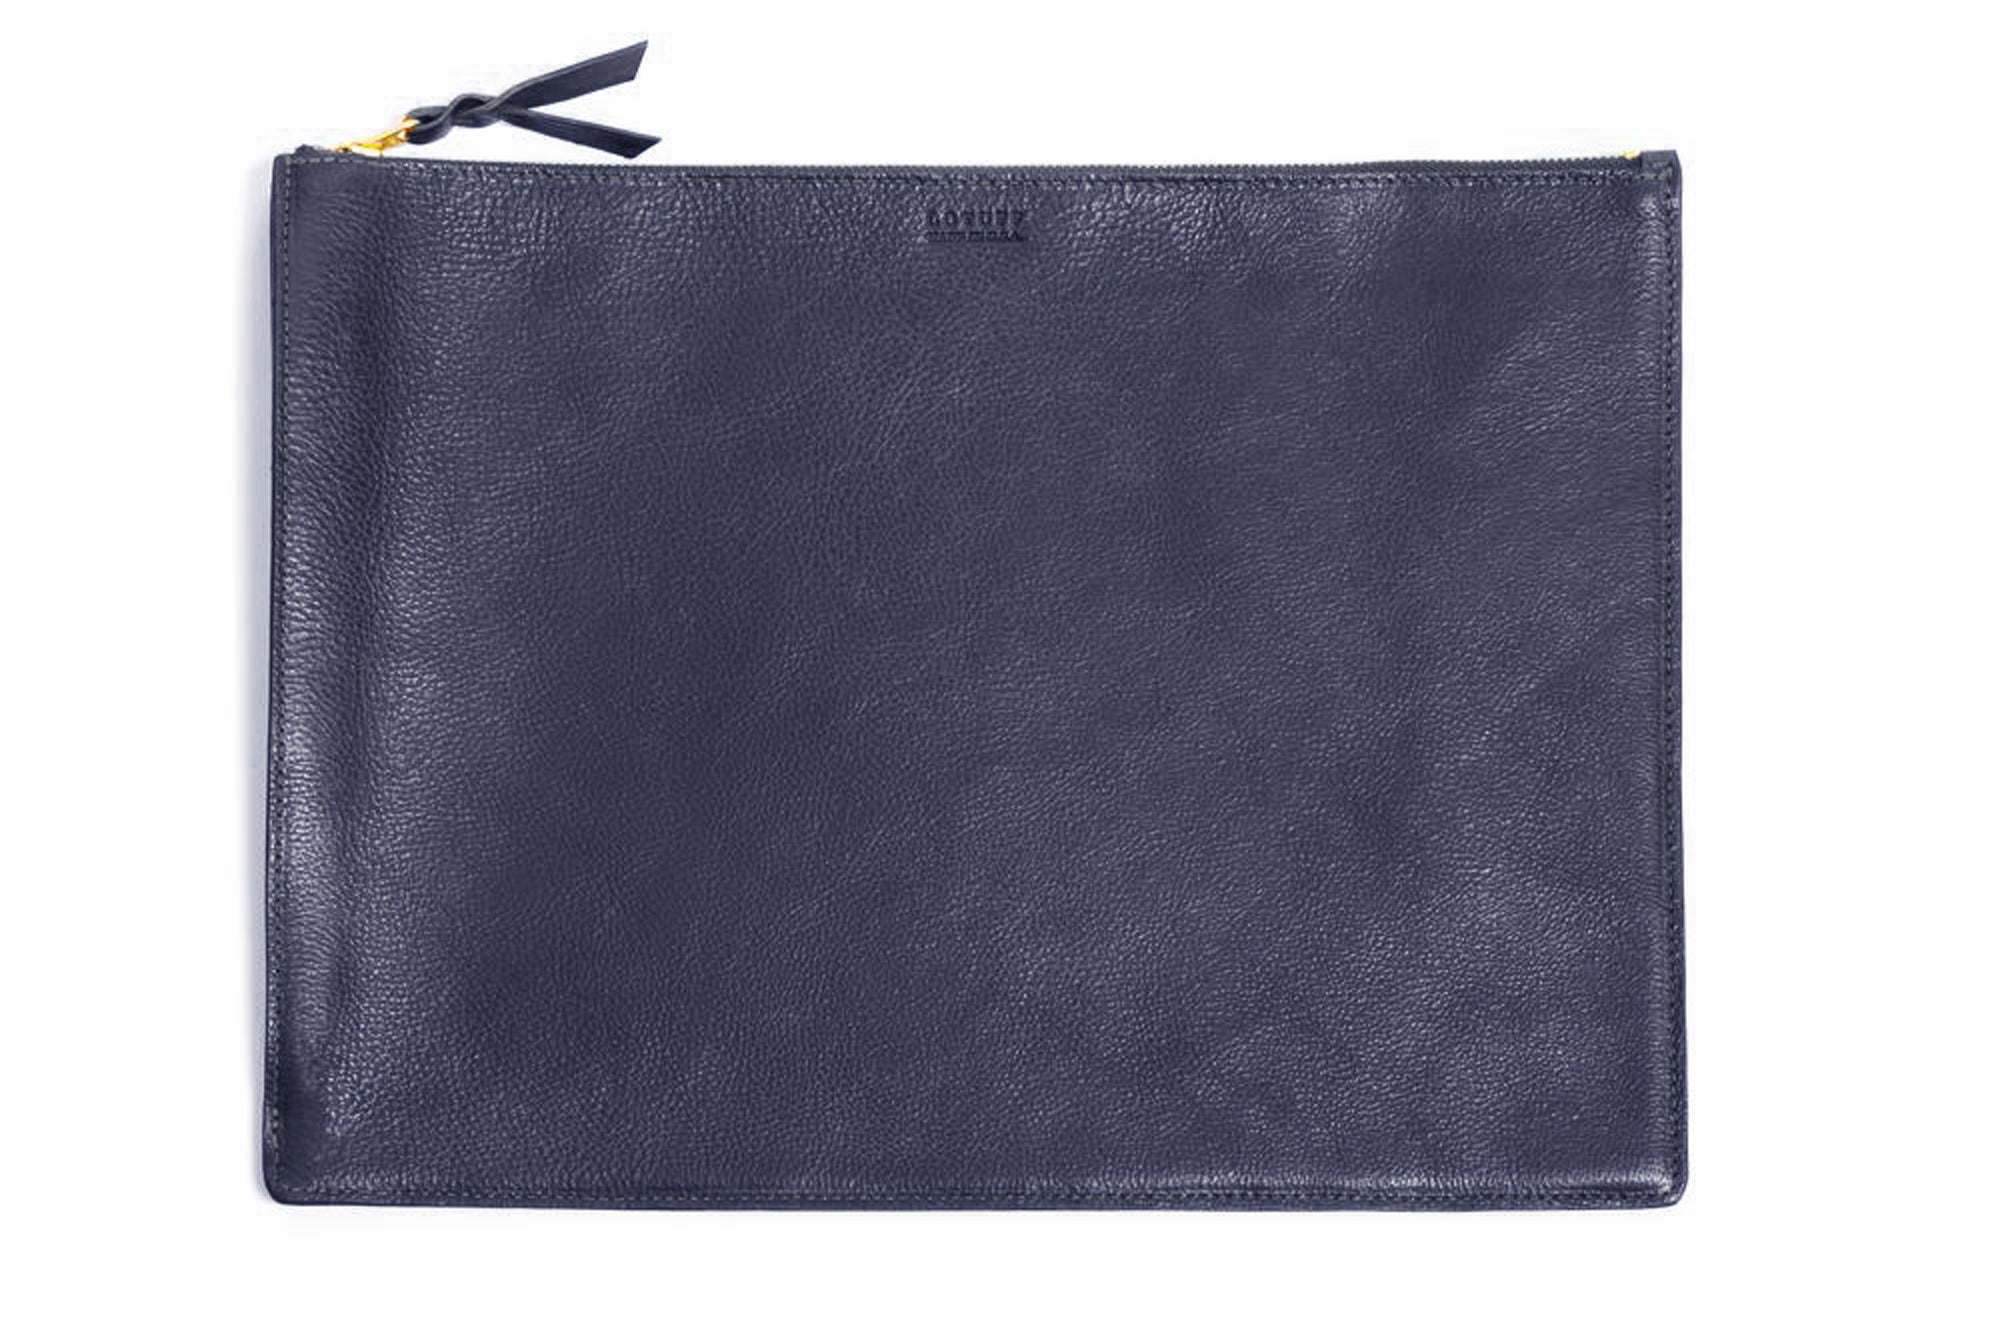 Buy Destinio Gadget Organizer Tech Pouch Bag, Blue - Destinio.in